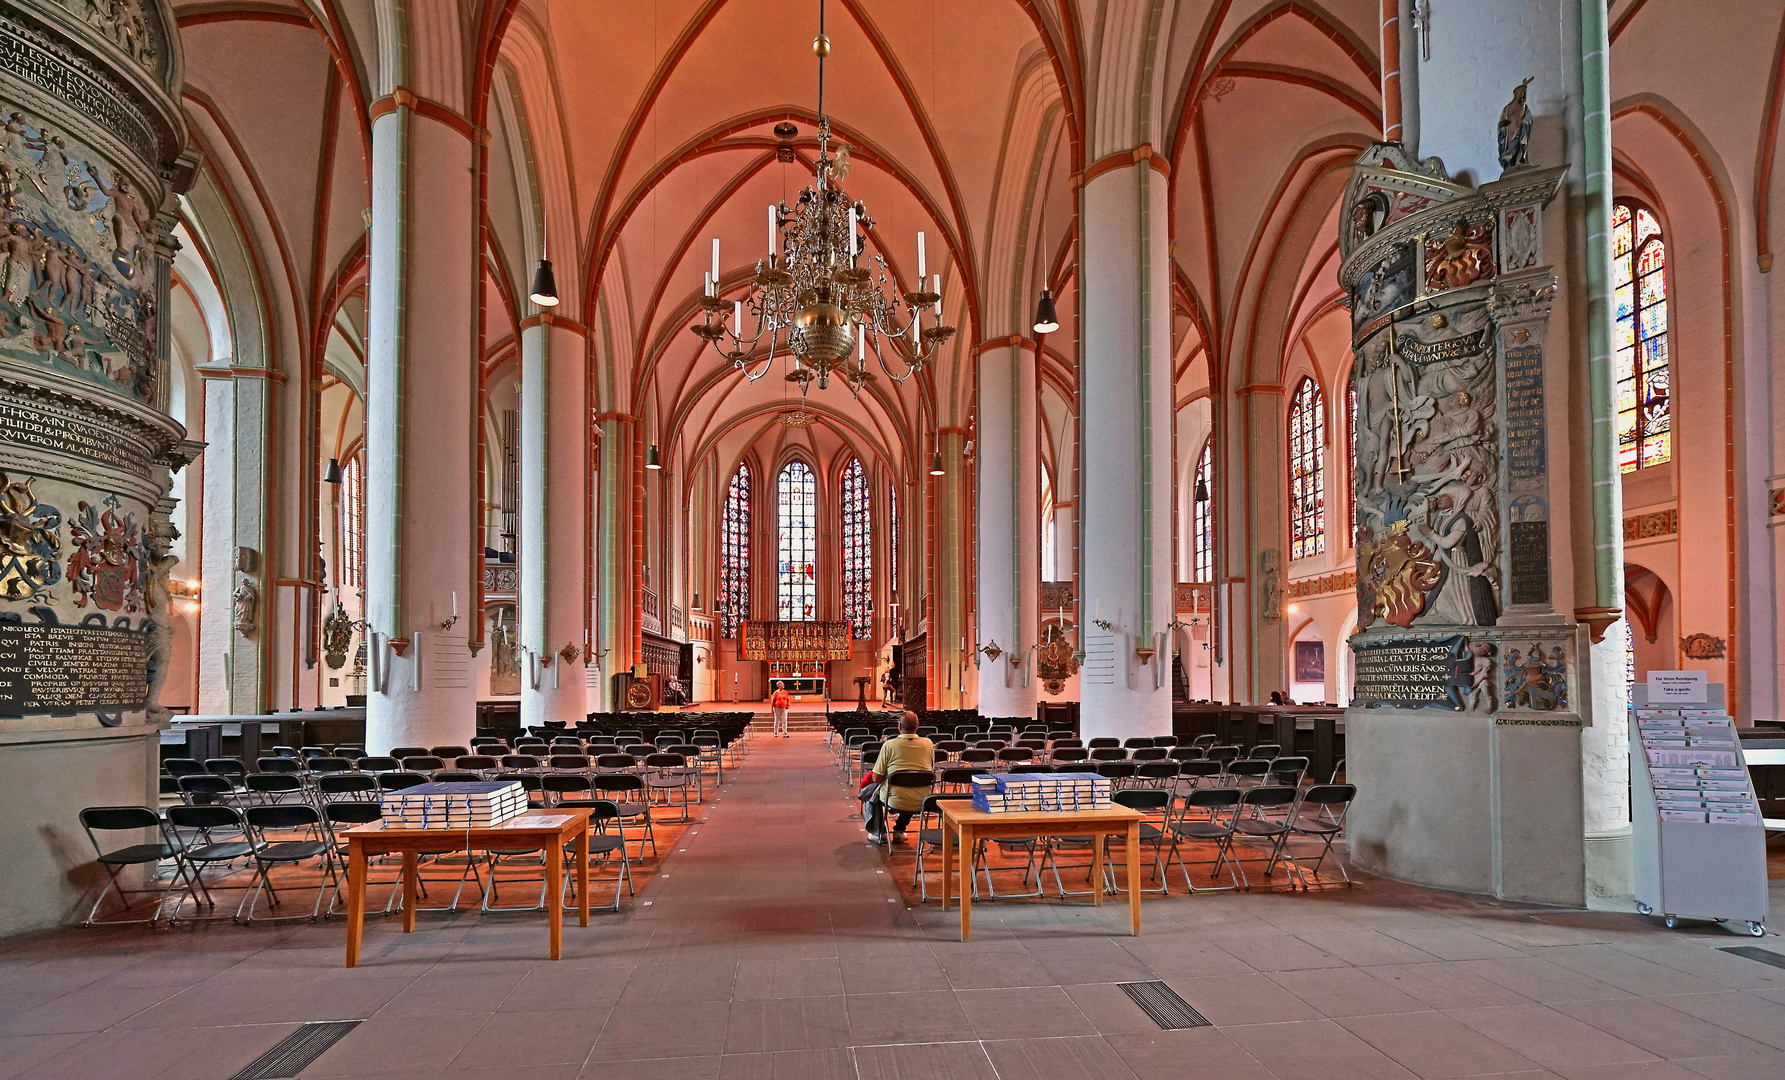  St, Johannis Lüneburg